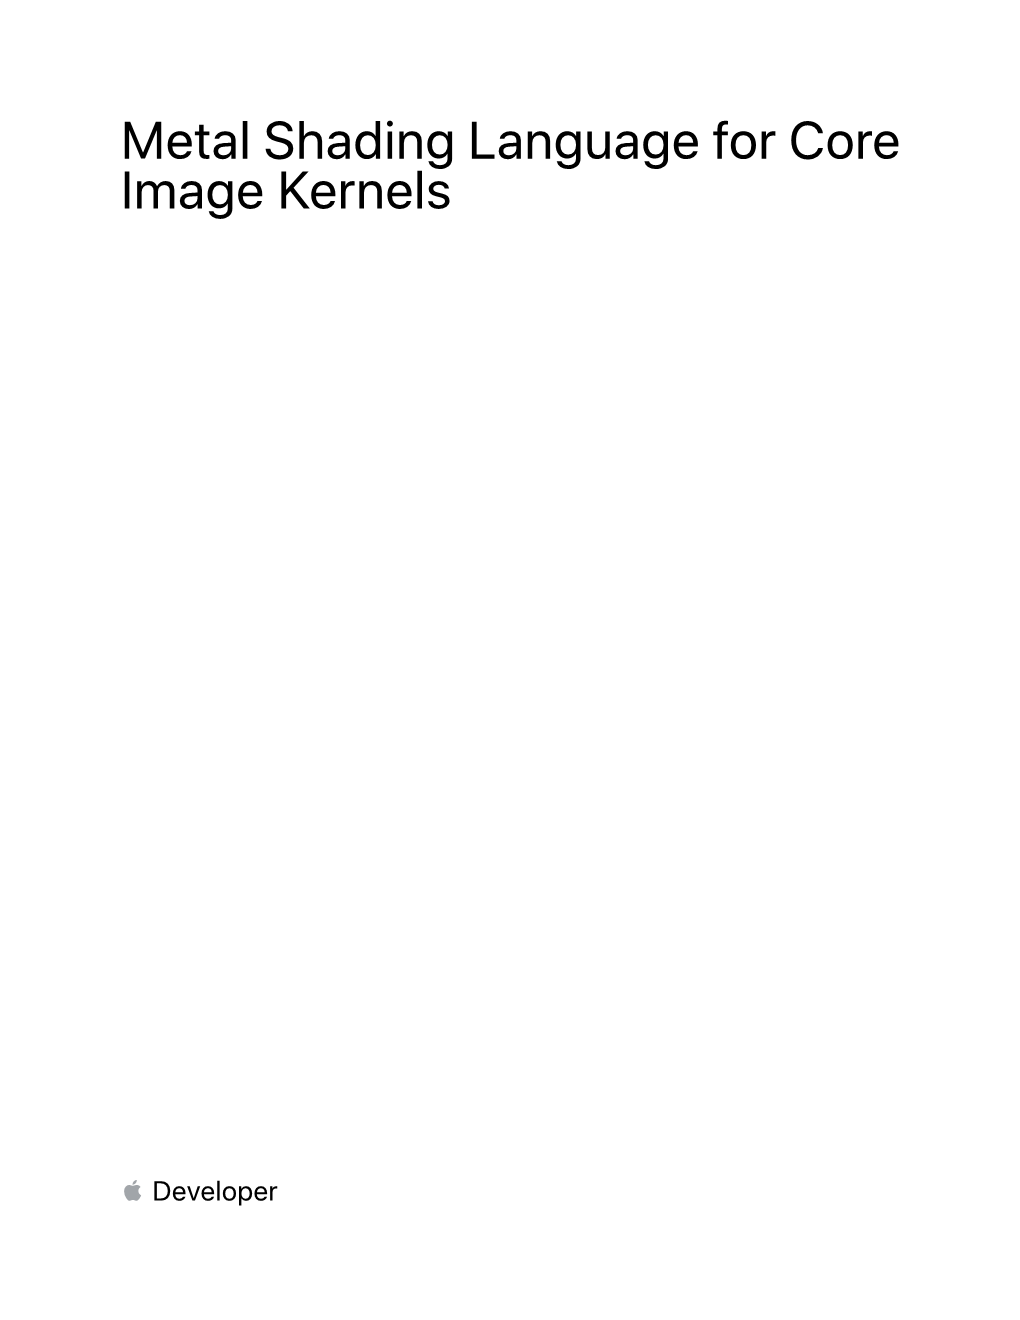 Metal Shading Language for Core Image Kernels